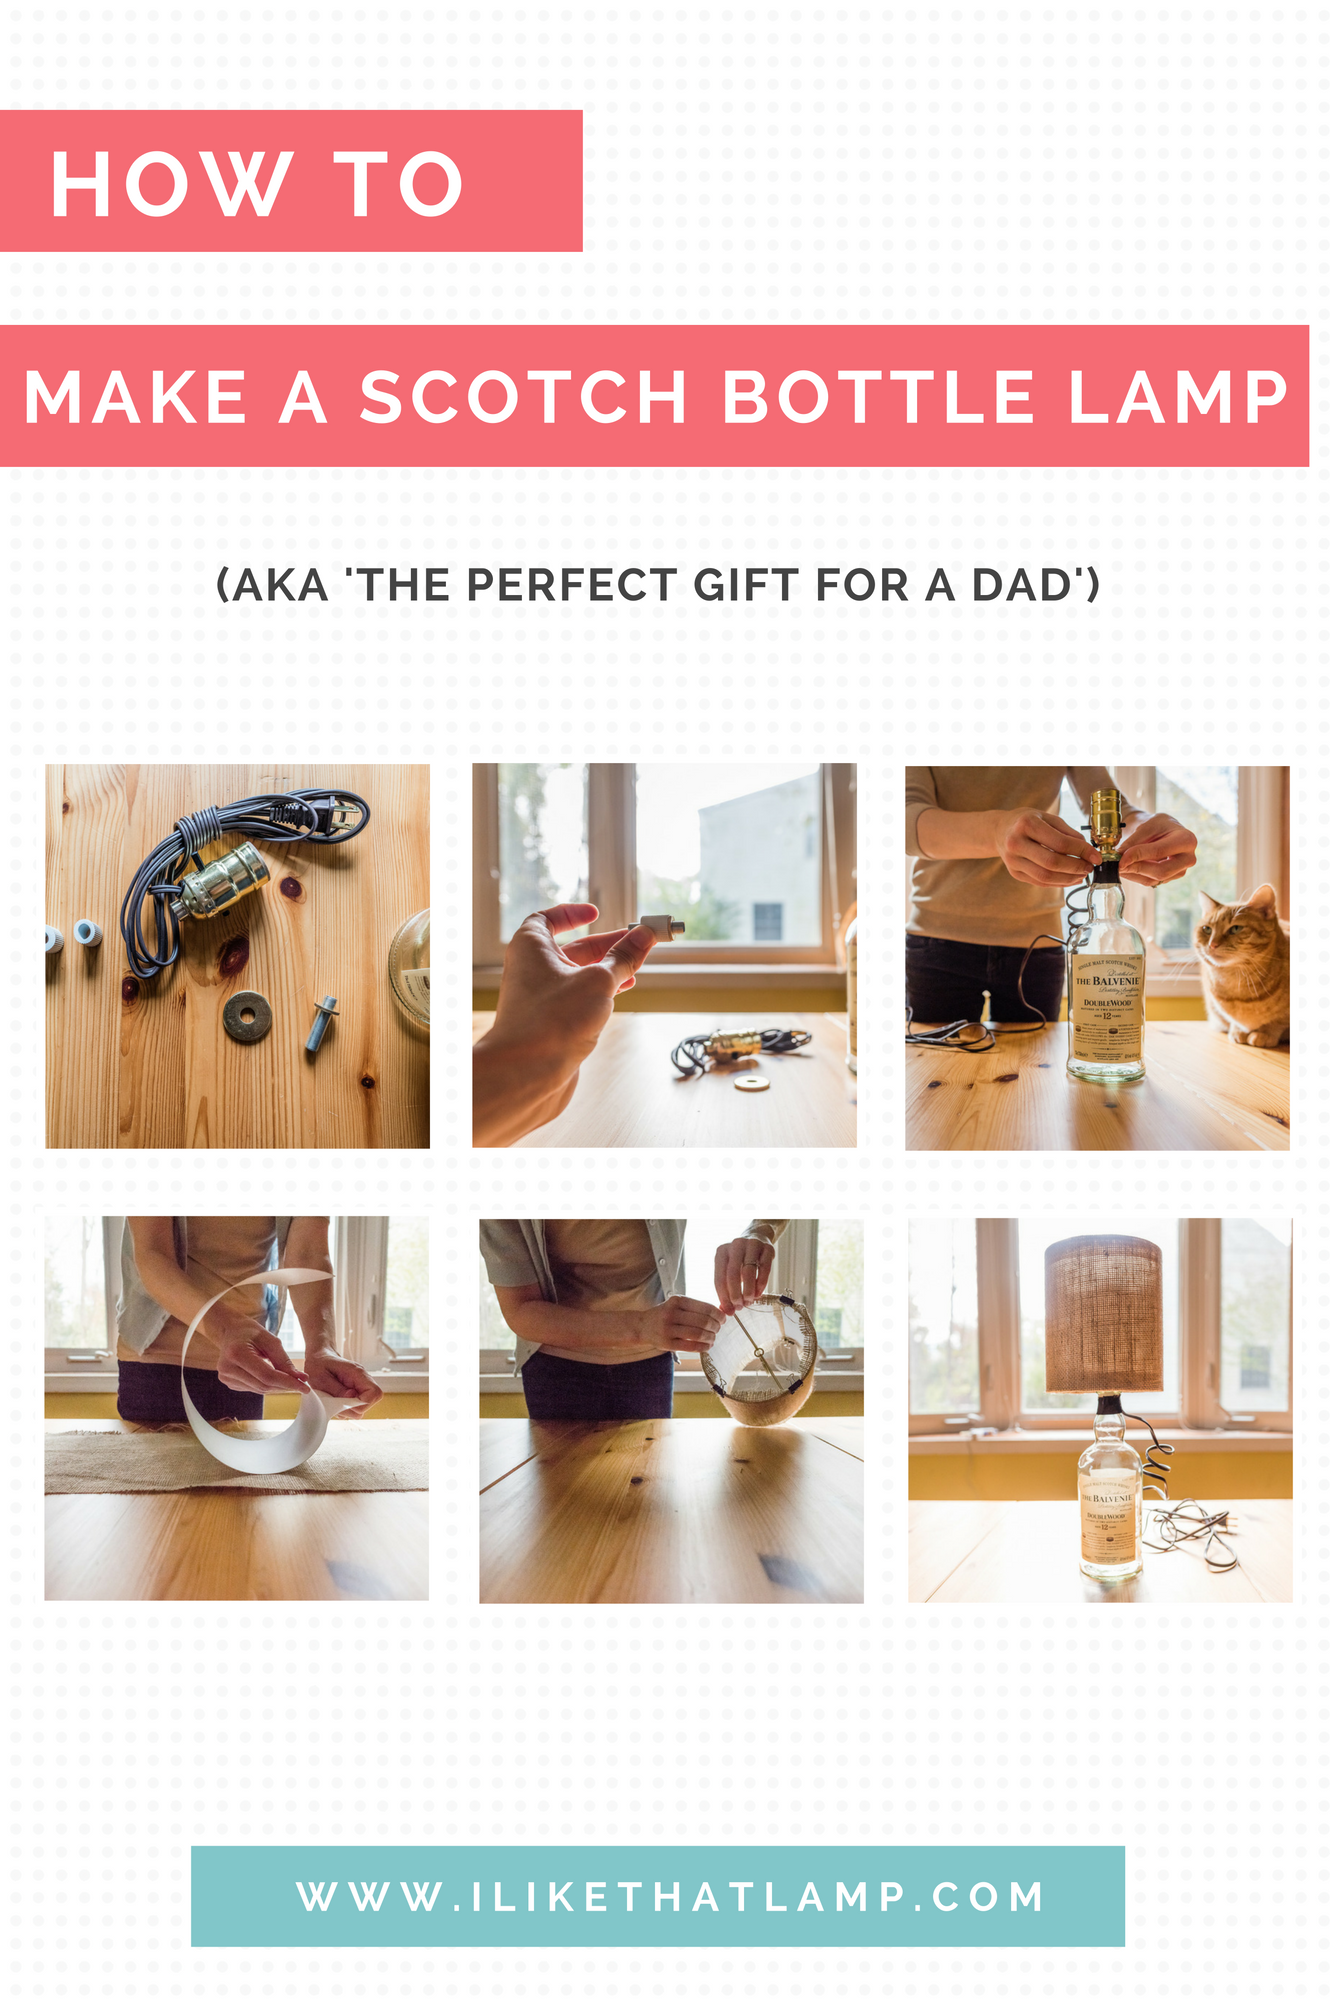 Handmade Decoupage Pride Love Rainbow Wine Bottle LED Lamp Upcycled Gift |  eBay